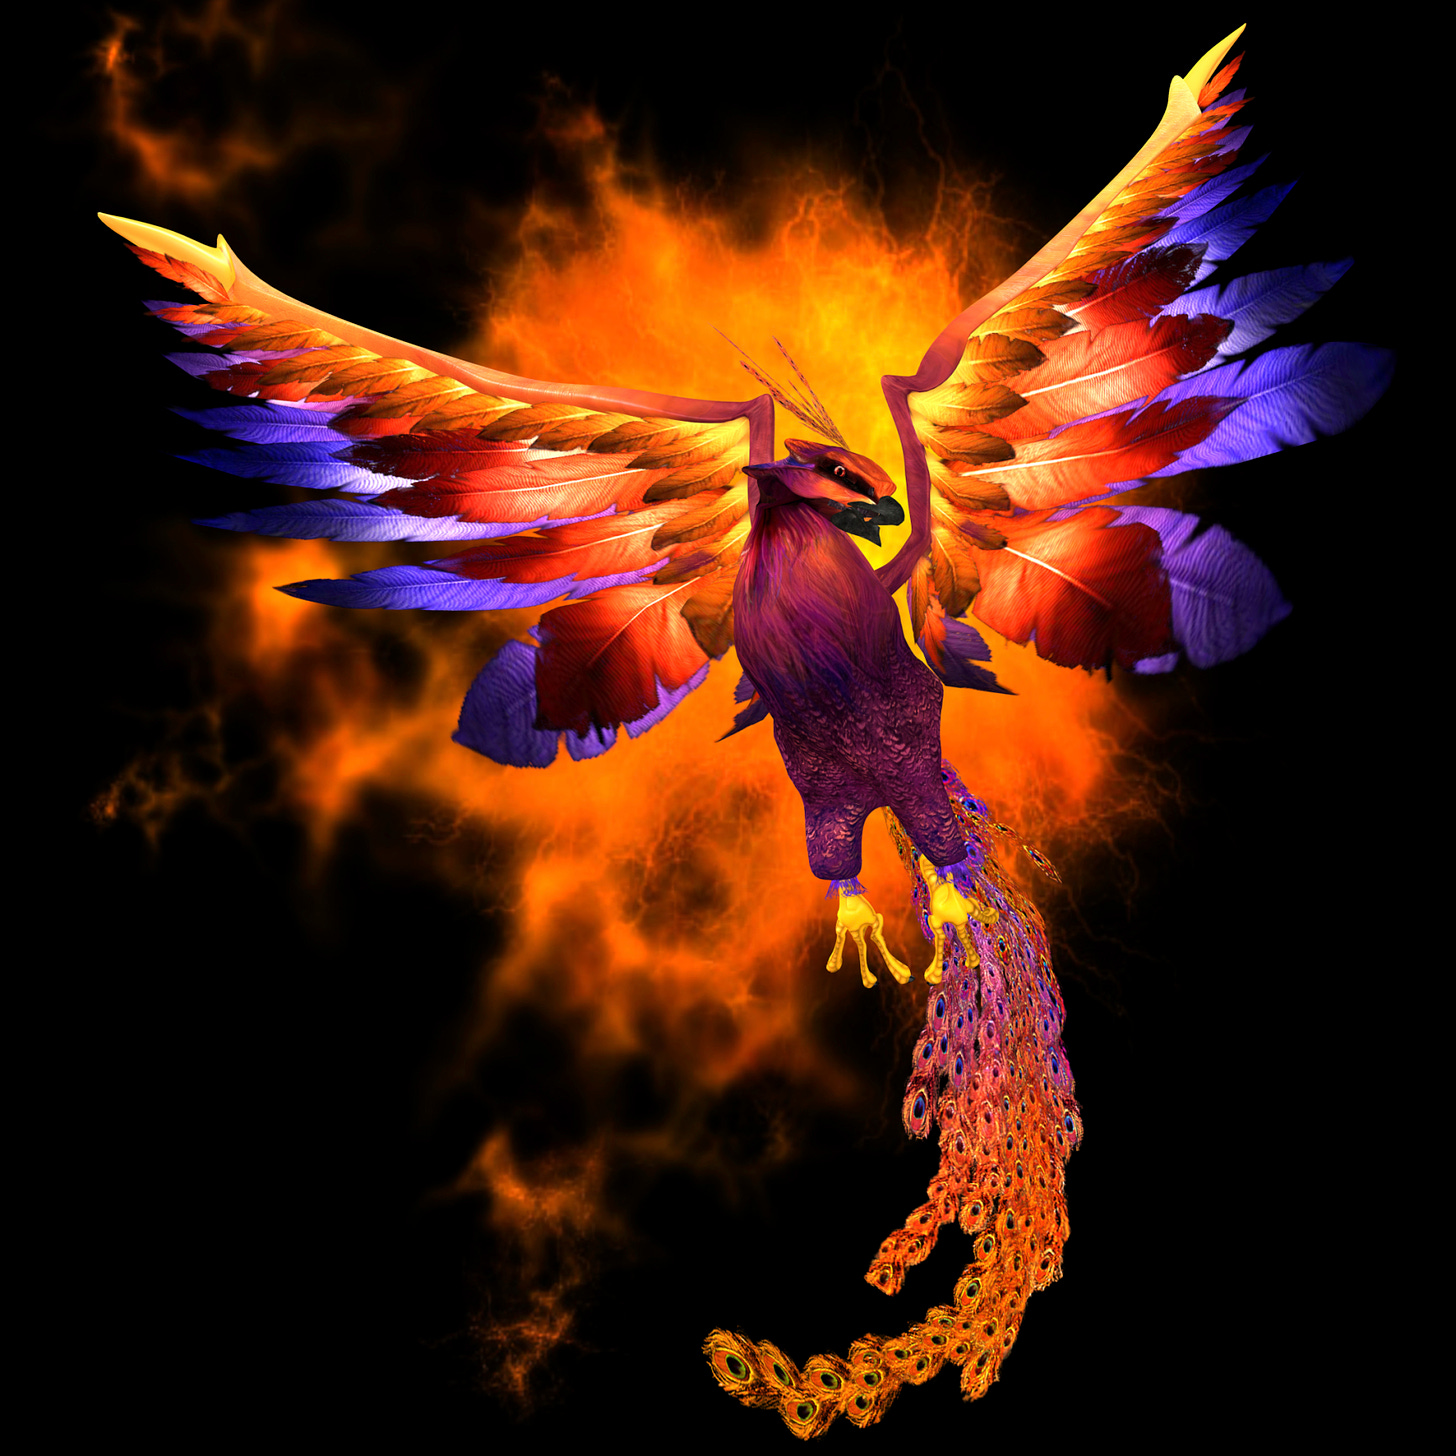 https://www.bhpalmbeach.com/wp-content/uploads/2014/11/phoenix_bird_rising_up_from_the_ashes.jpg